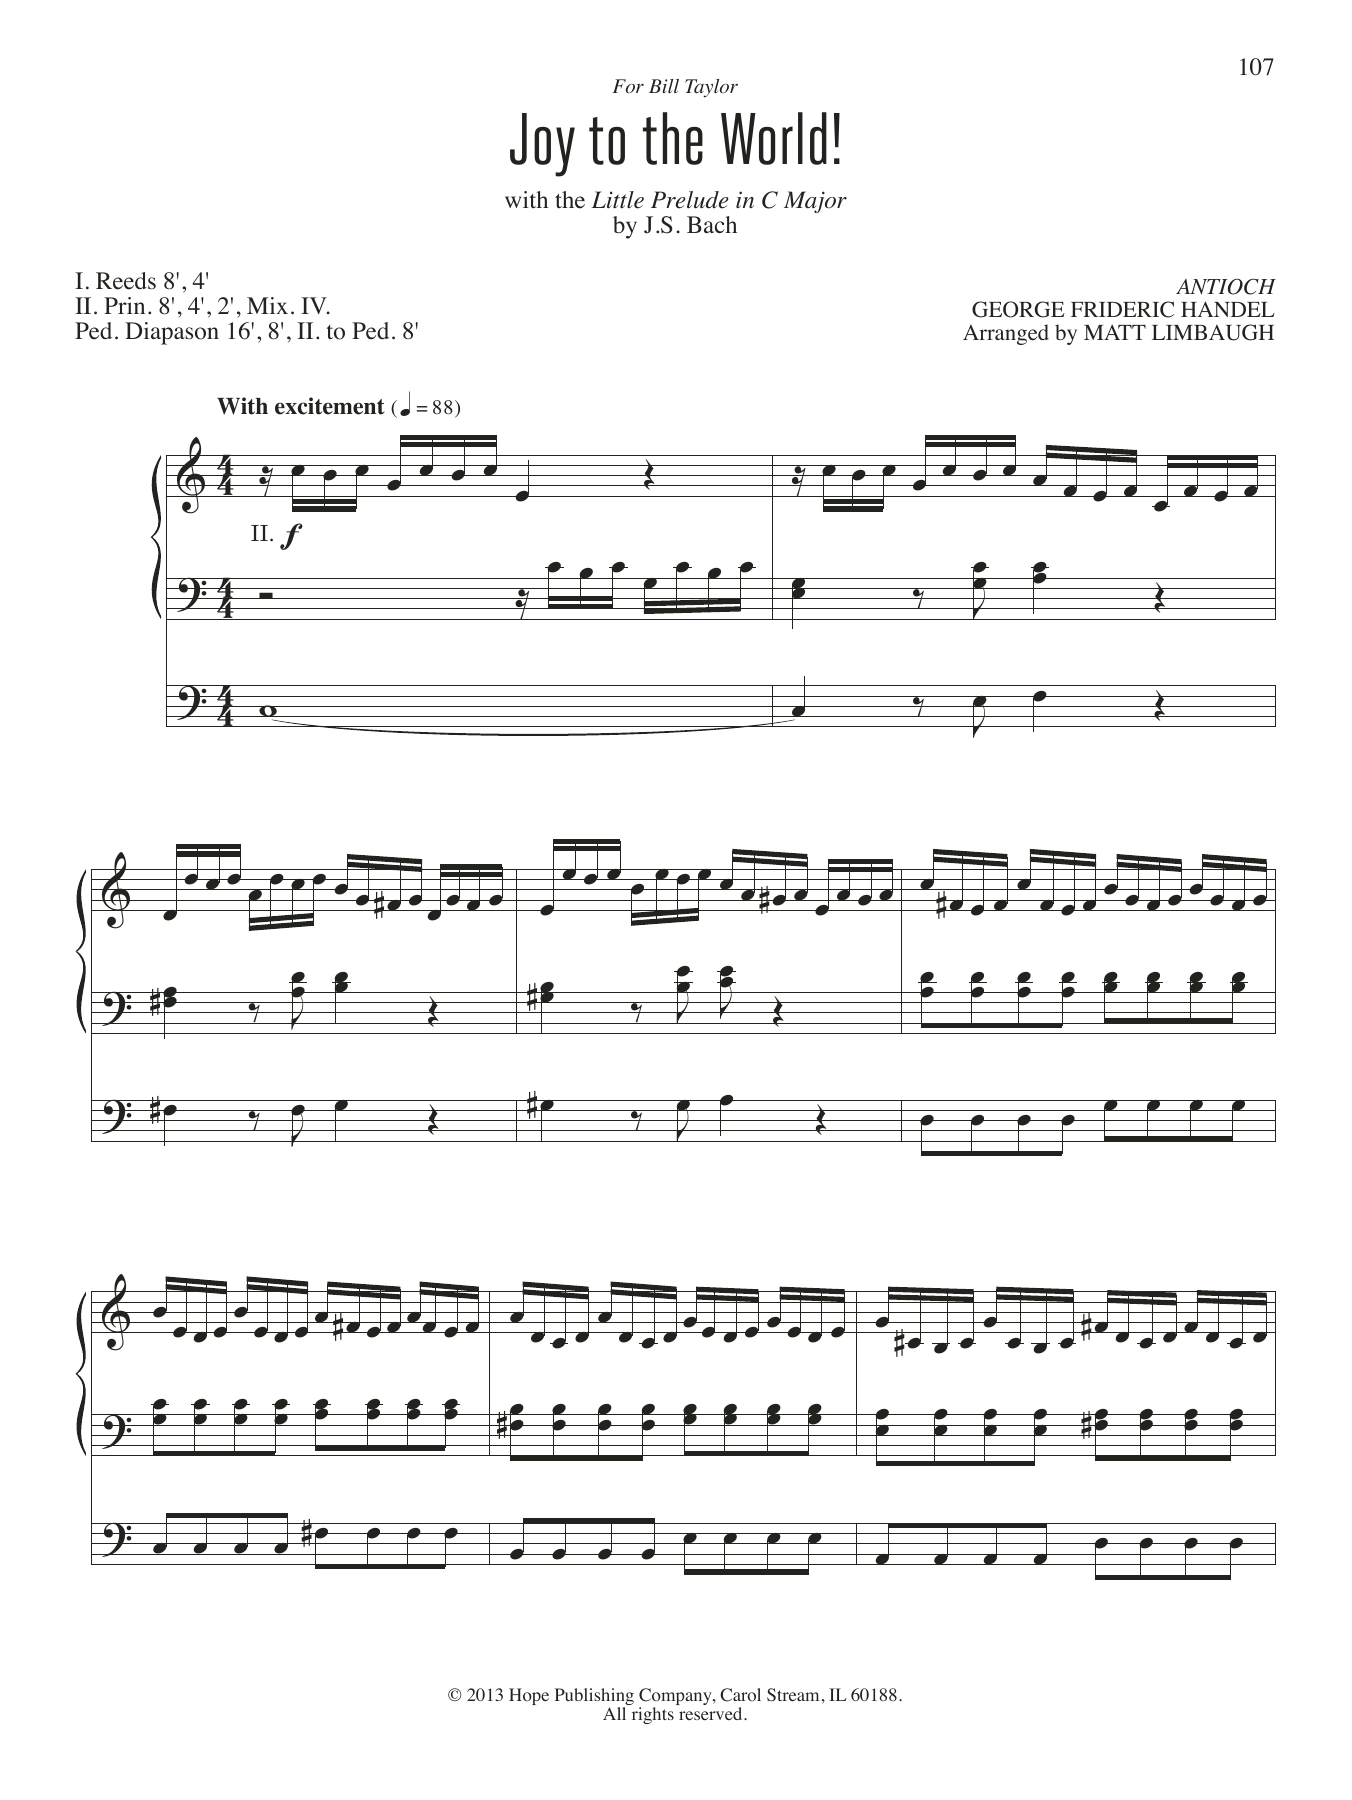 Matt Limbaugh Joy to the World! Sheet Music Notes & Chords for Organ - Download or Print PDF